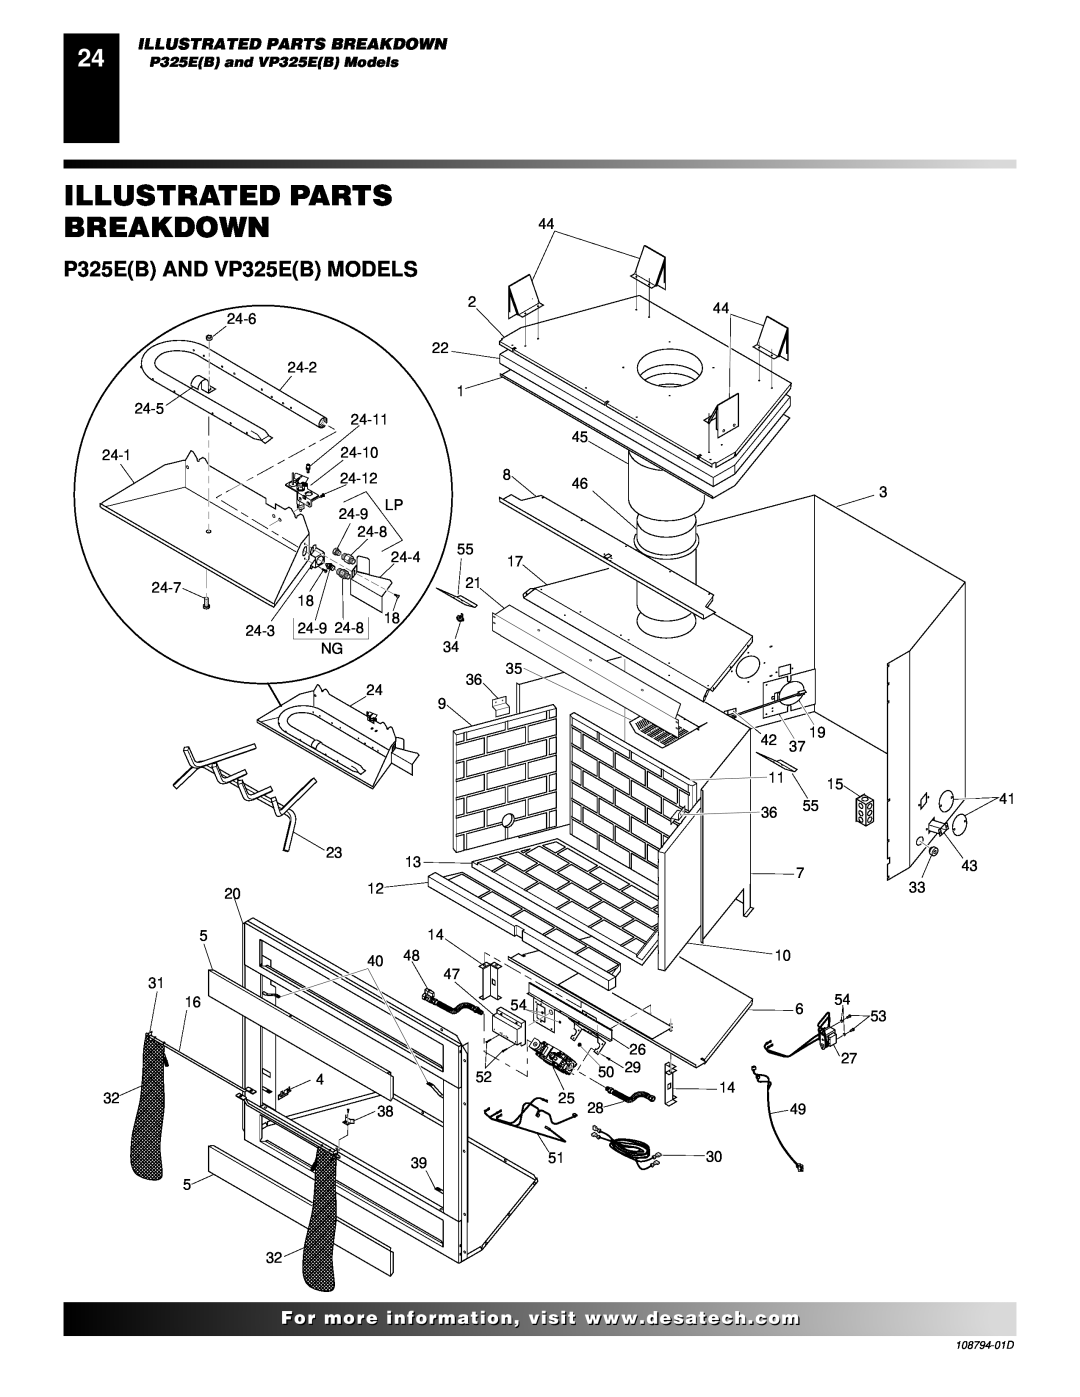 Desa VP325E(B) installation manual ILLUSTRATED PARTS BREAKDOWN44, P325EB AND VP325EB MODELS, Illustrated Parts Breakdown 